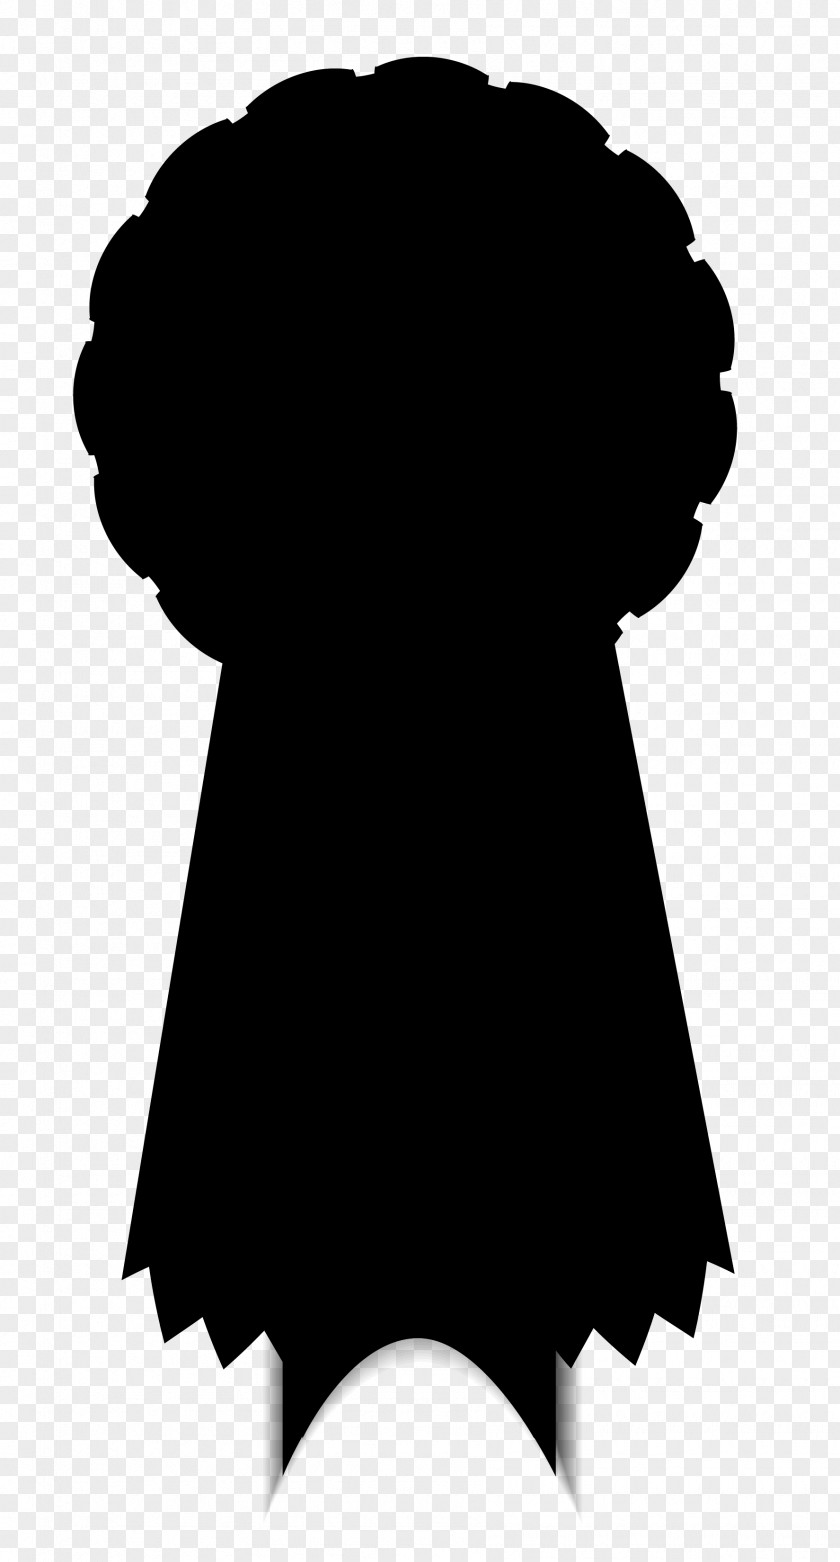 Sherlock Holmes Silhouette Clip Art Image PNG